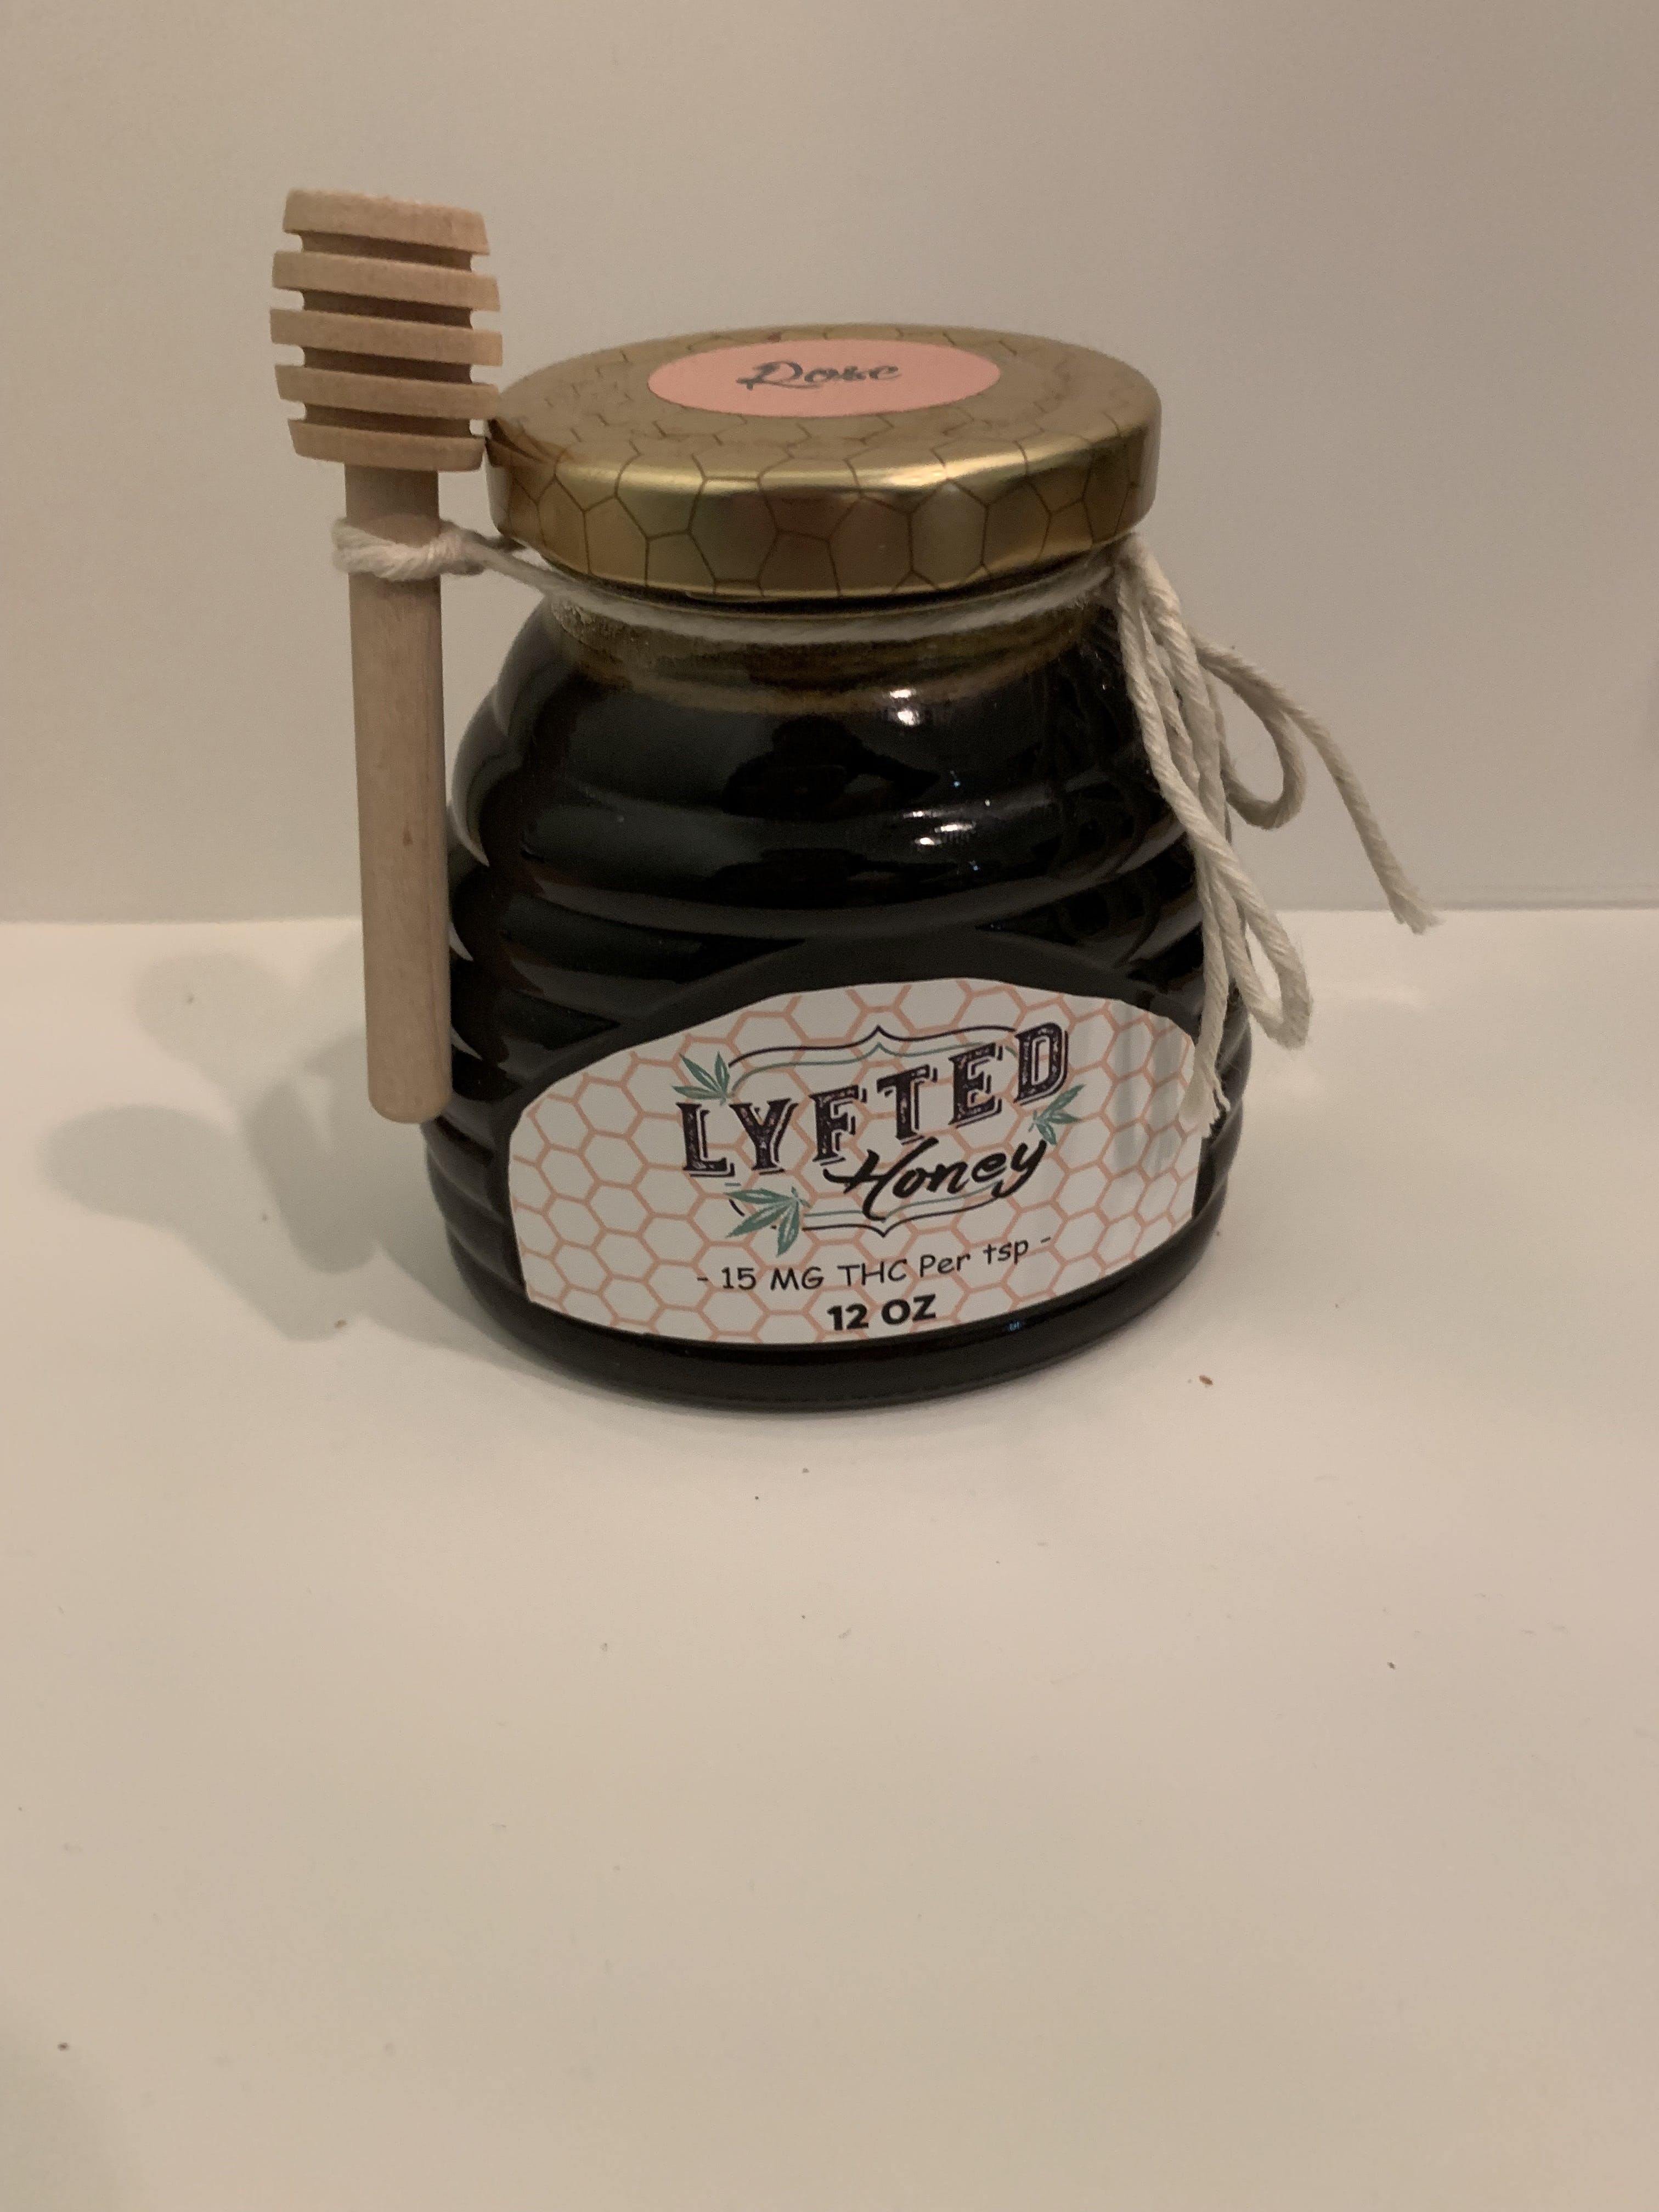 edible-lyfted-honey-1000mg